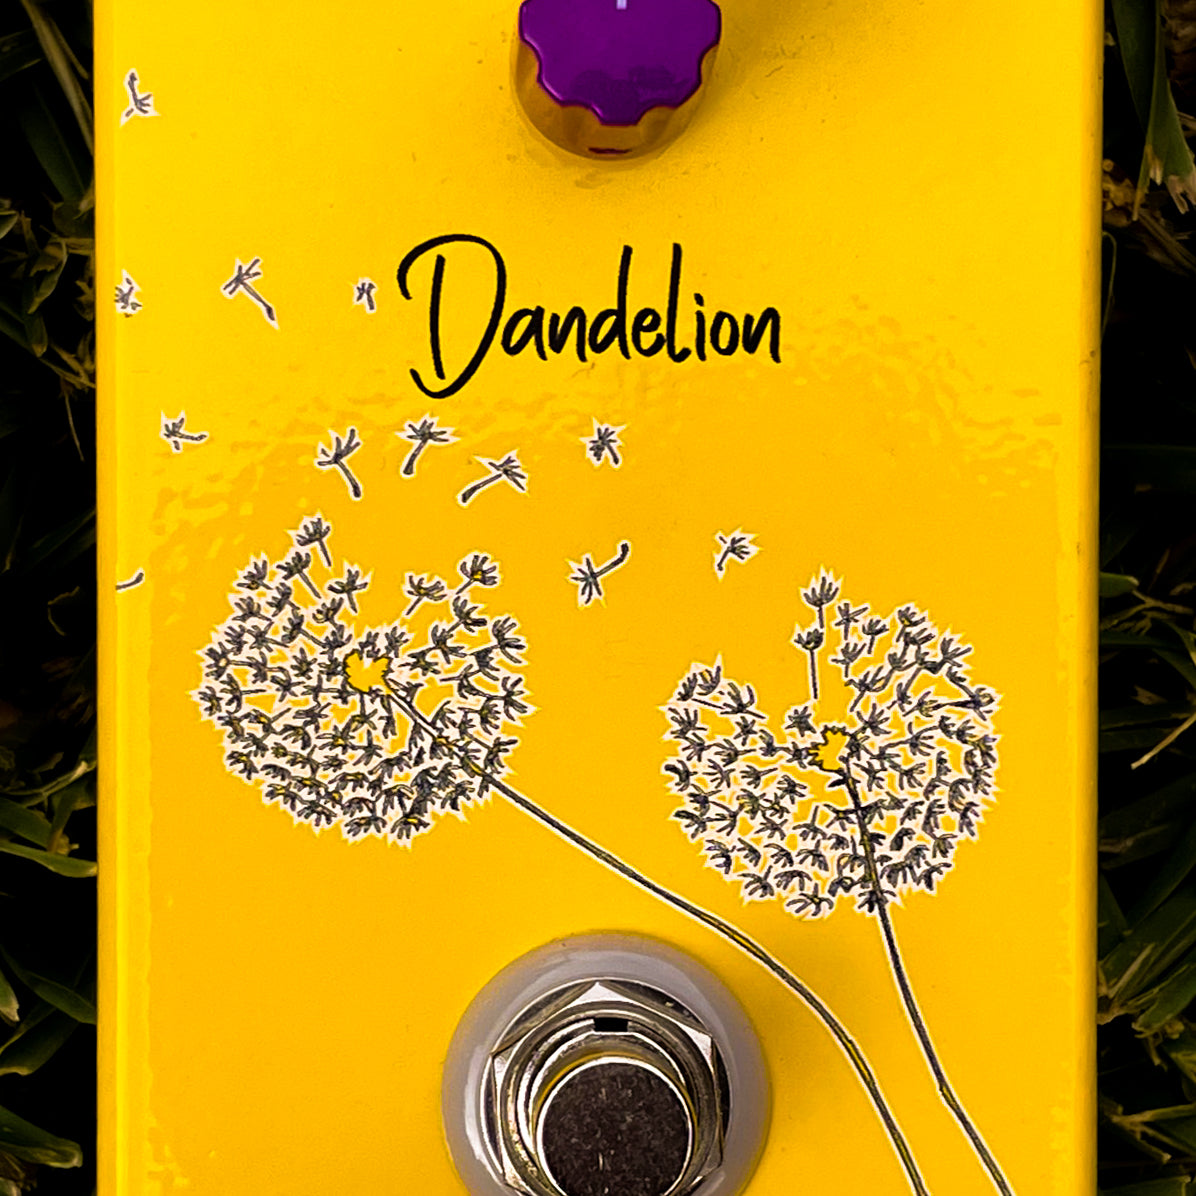 DANDELION - fuzzdrive guitar pedal